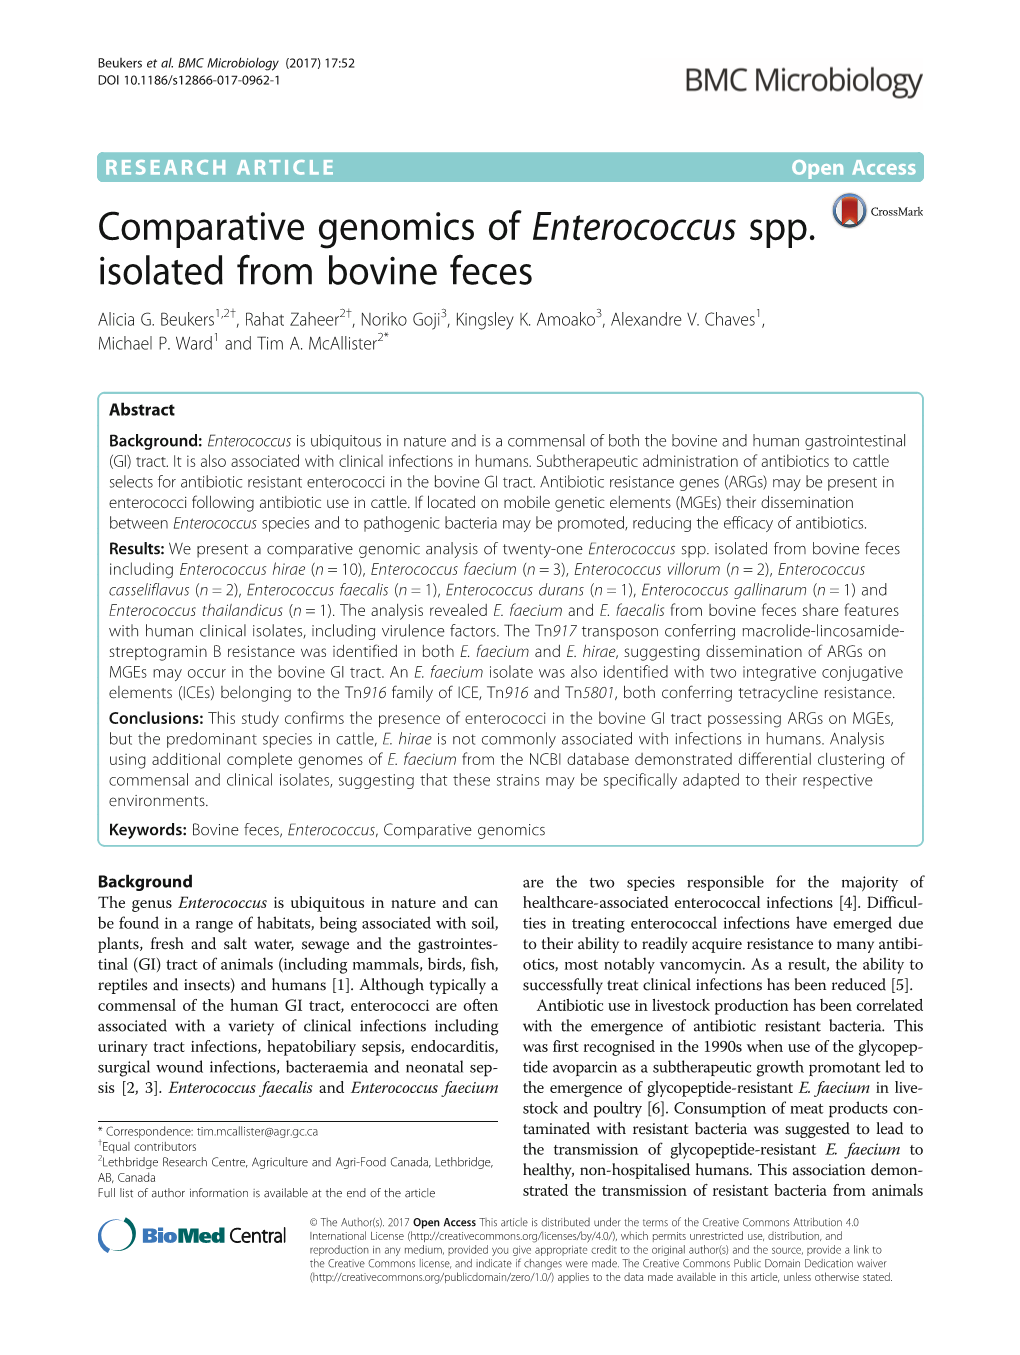 Comparative Genomics of Enterococcus Spp. Isolated from Bovine Feces Alicia G